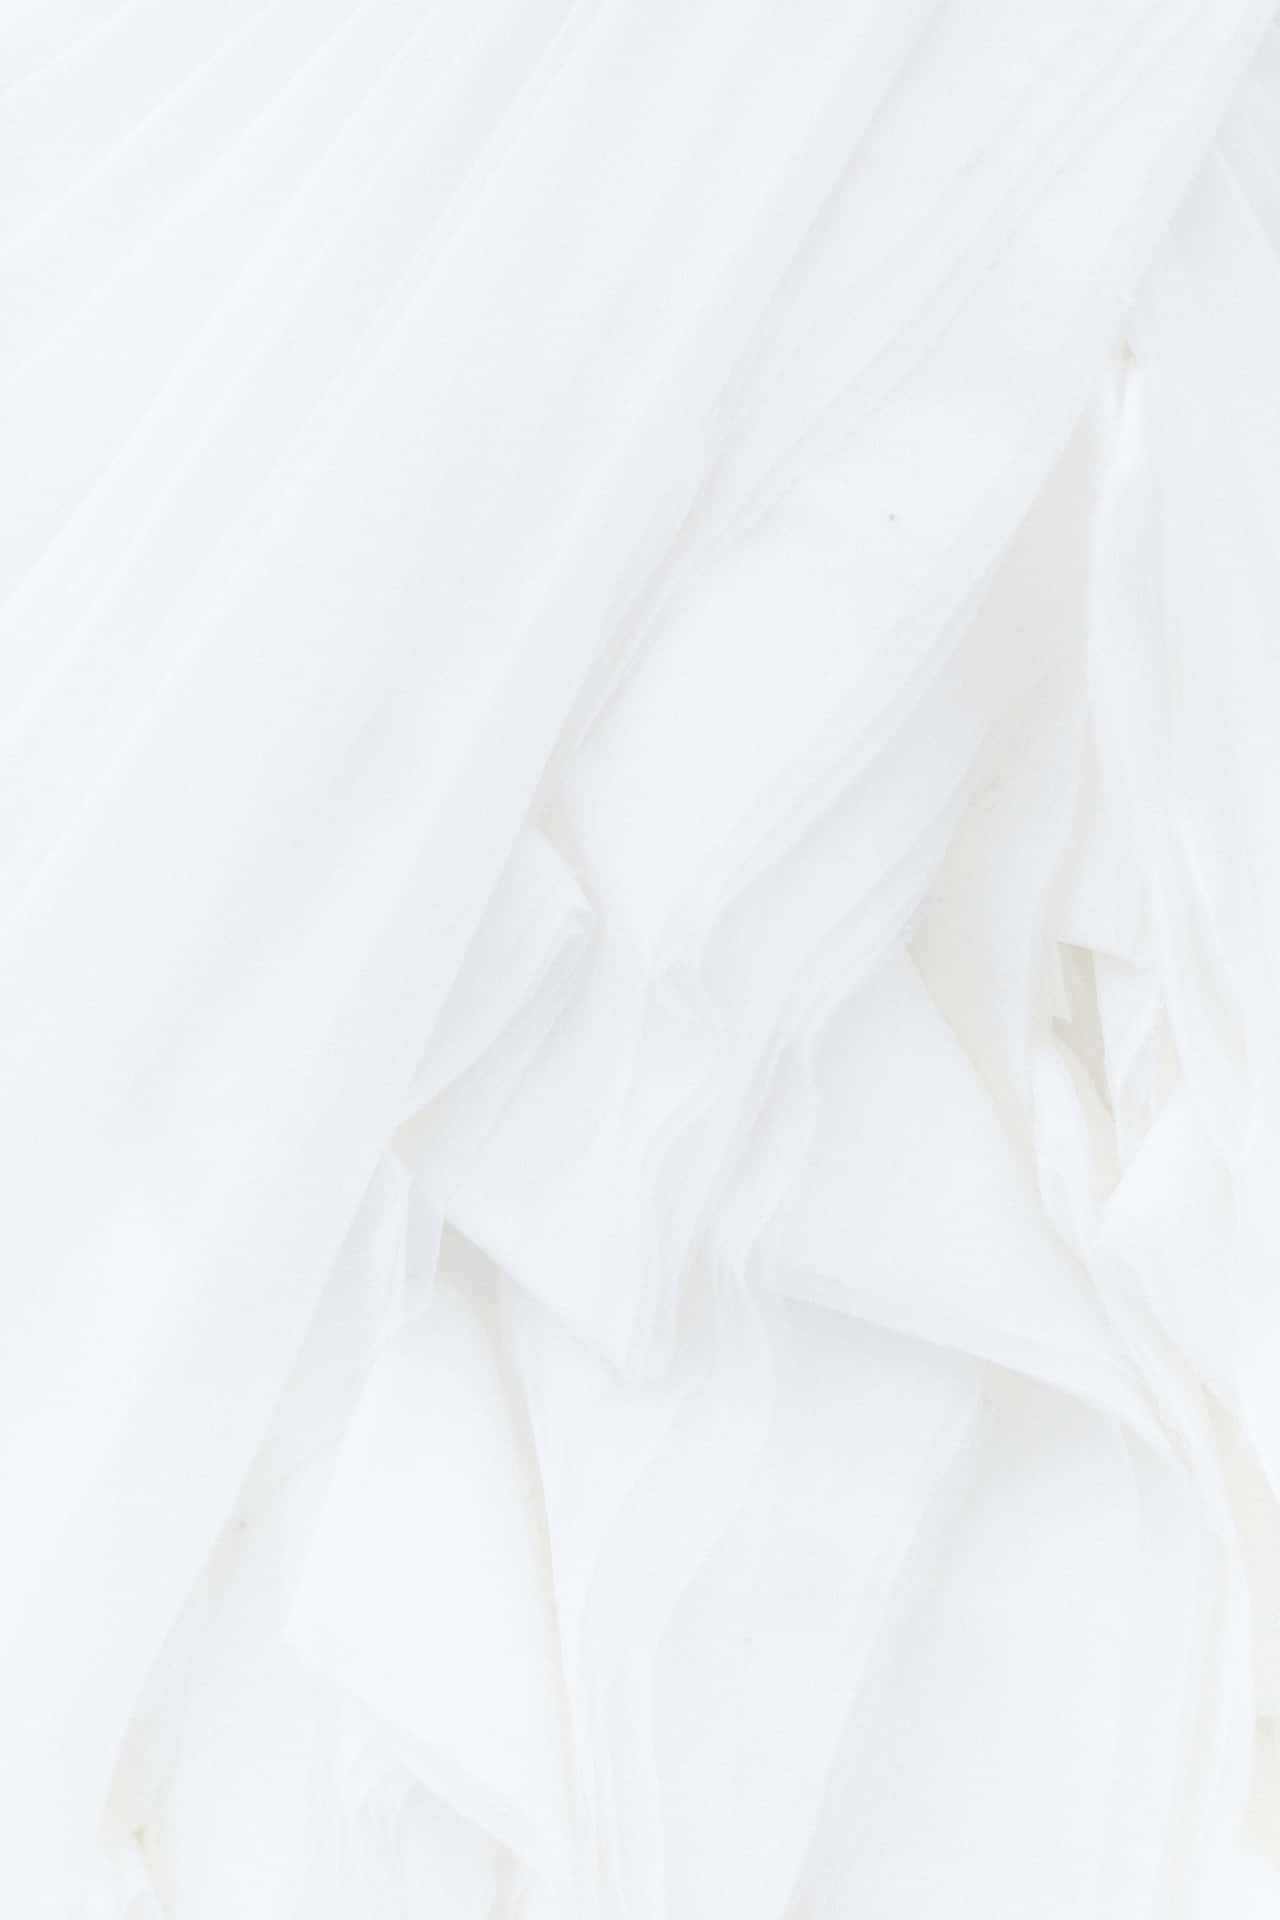 A Plain White Silk Background